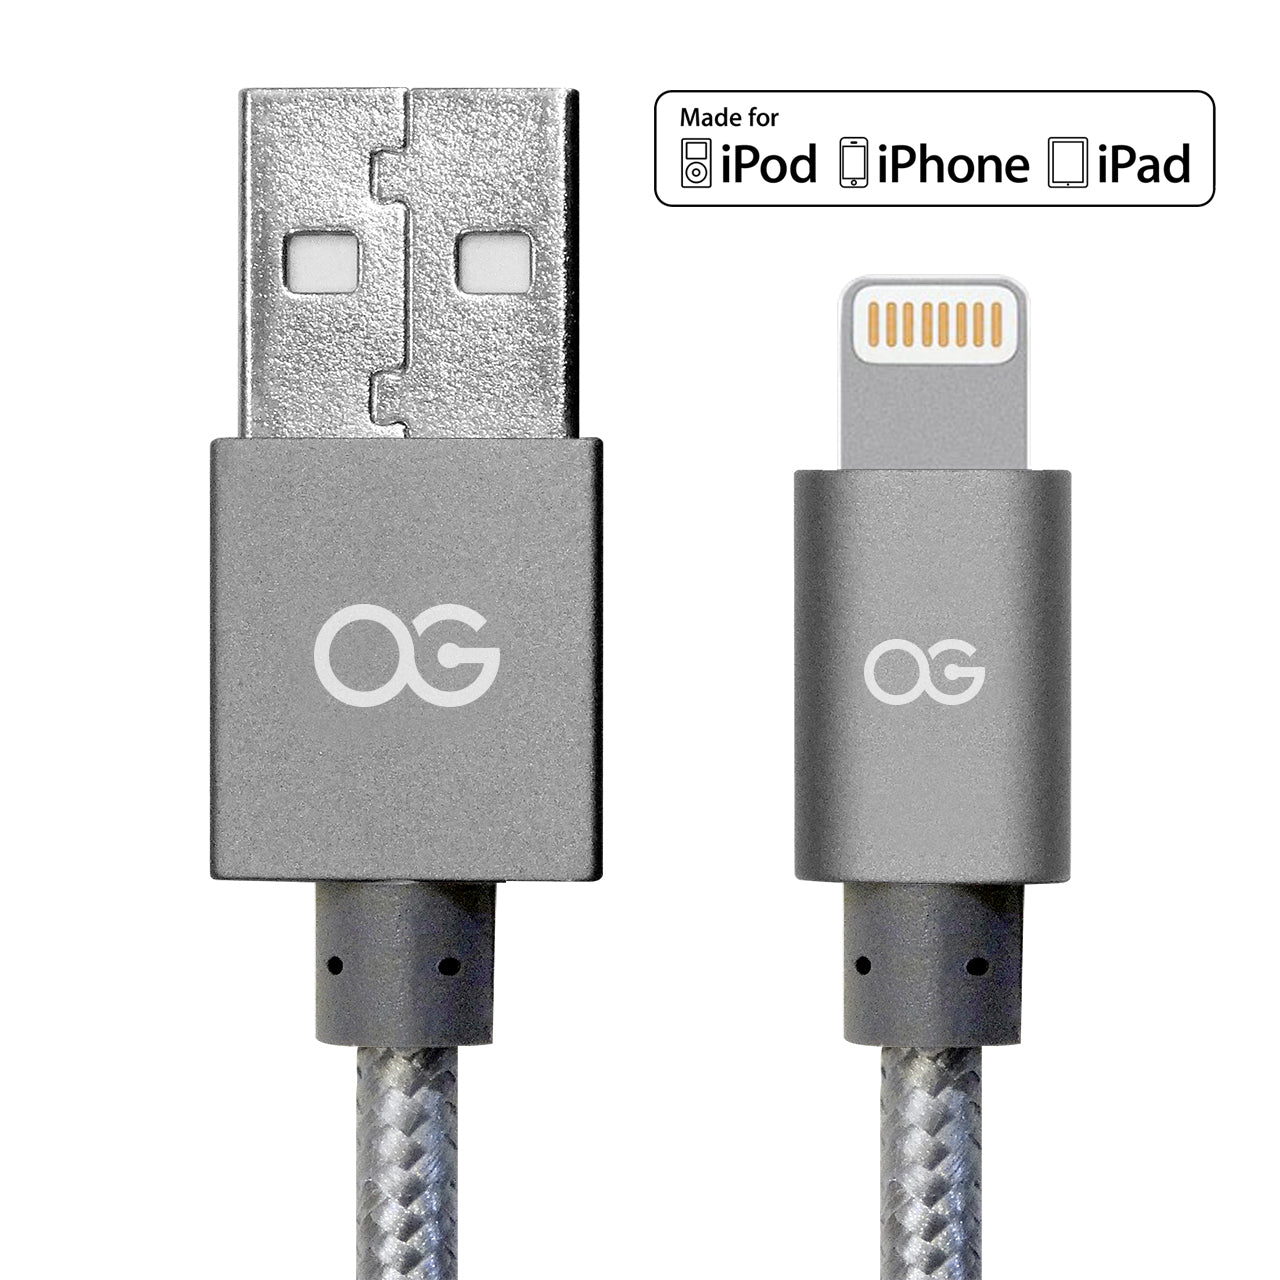 Cable iPhone USB A a Lightning ORIGINAL, [Apple MFi Certificado], 1 m